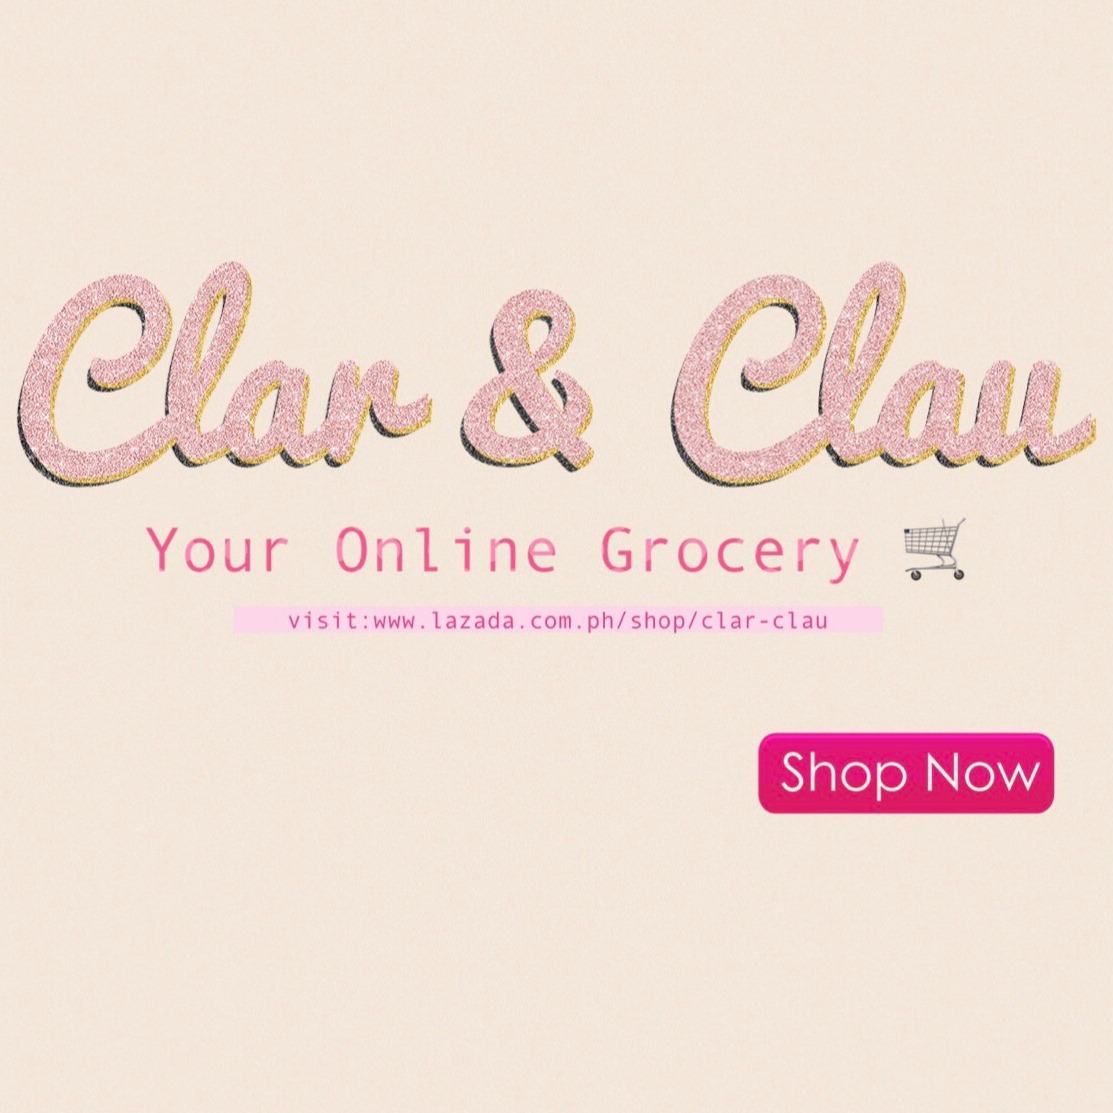 Shop online with Clar & Clau now! Visit Clar & Clau on Lazada.